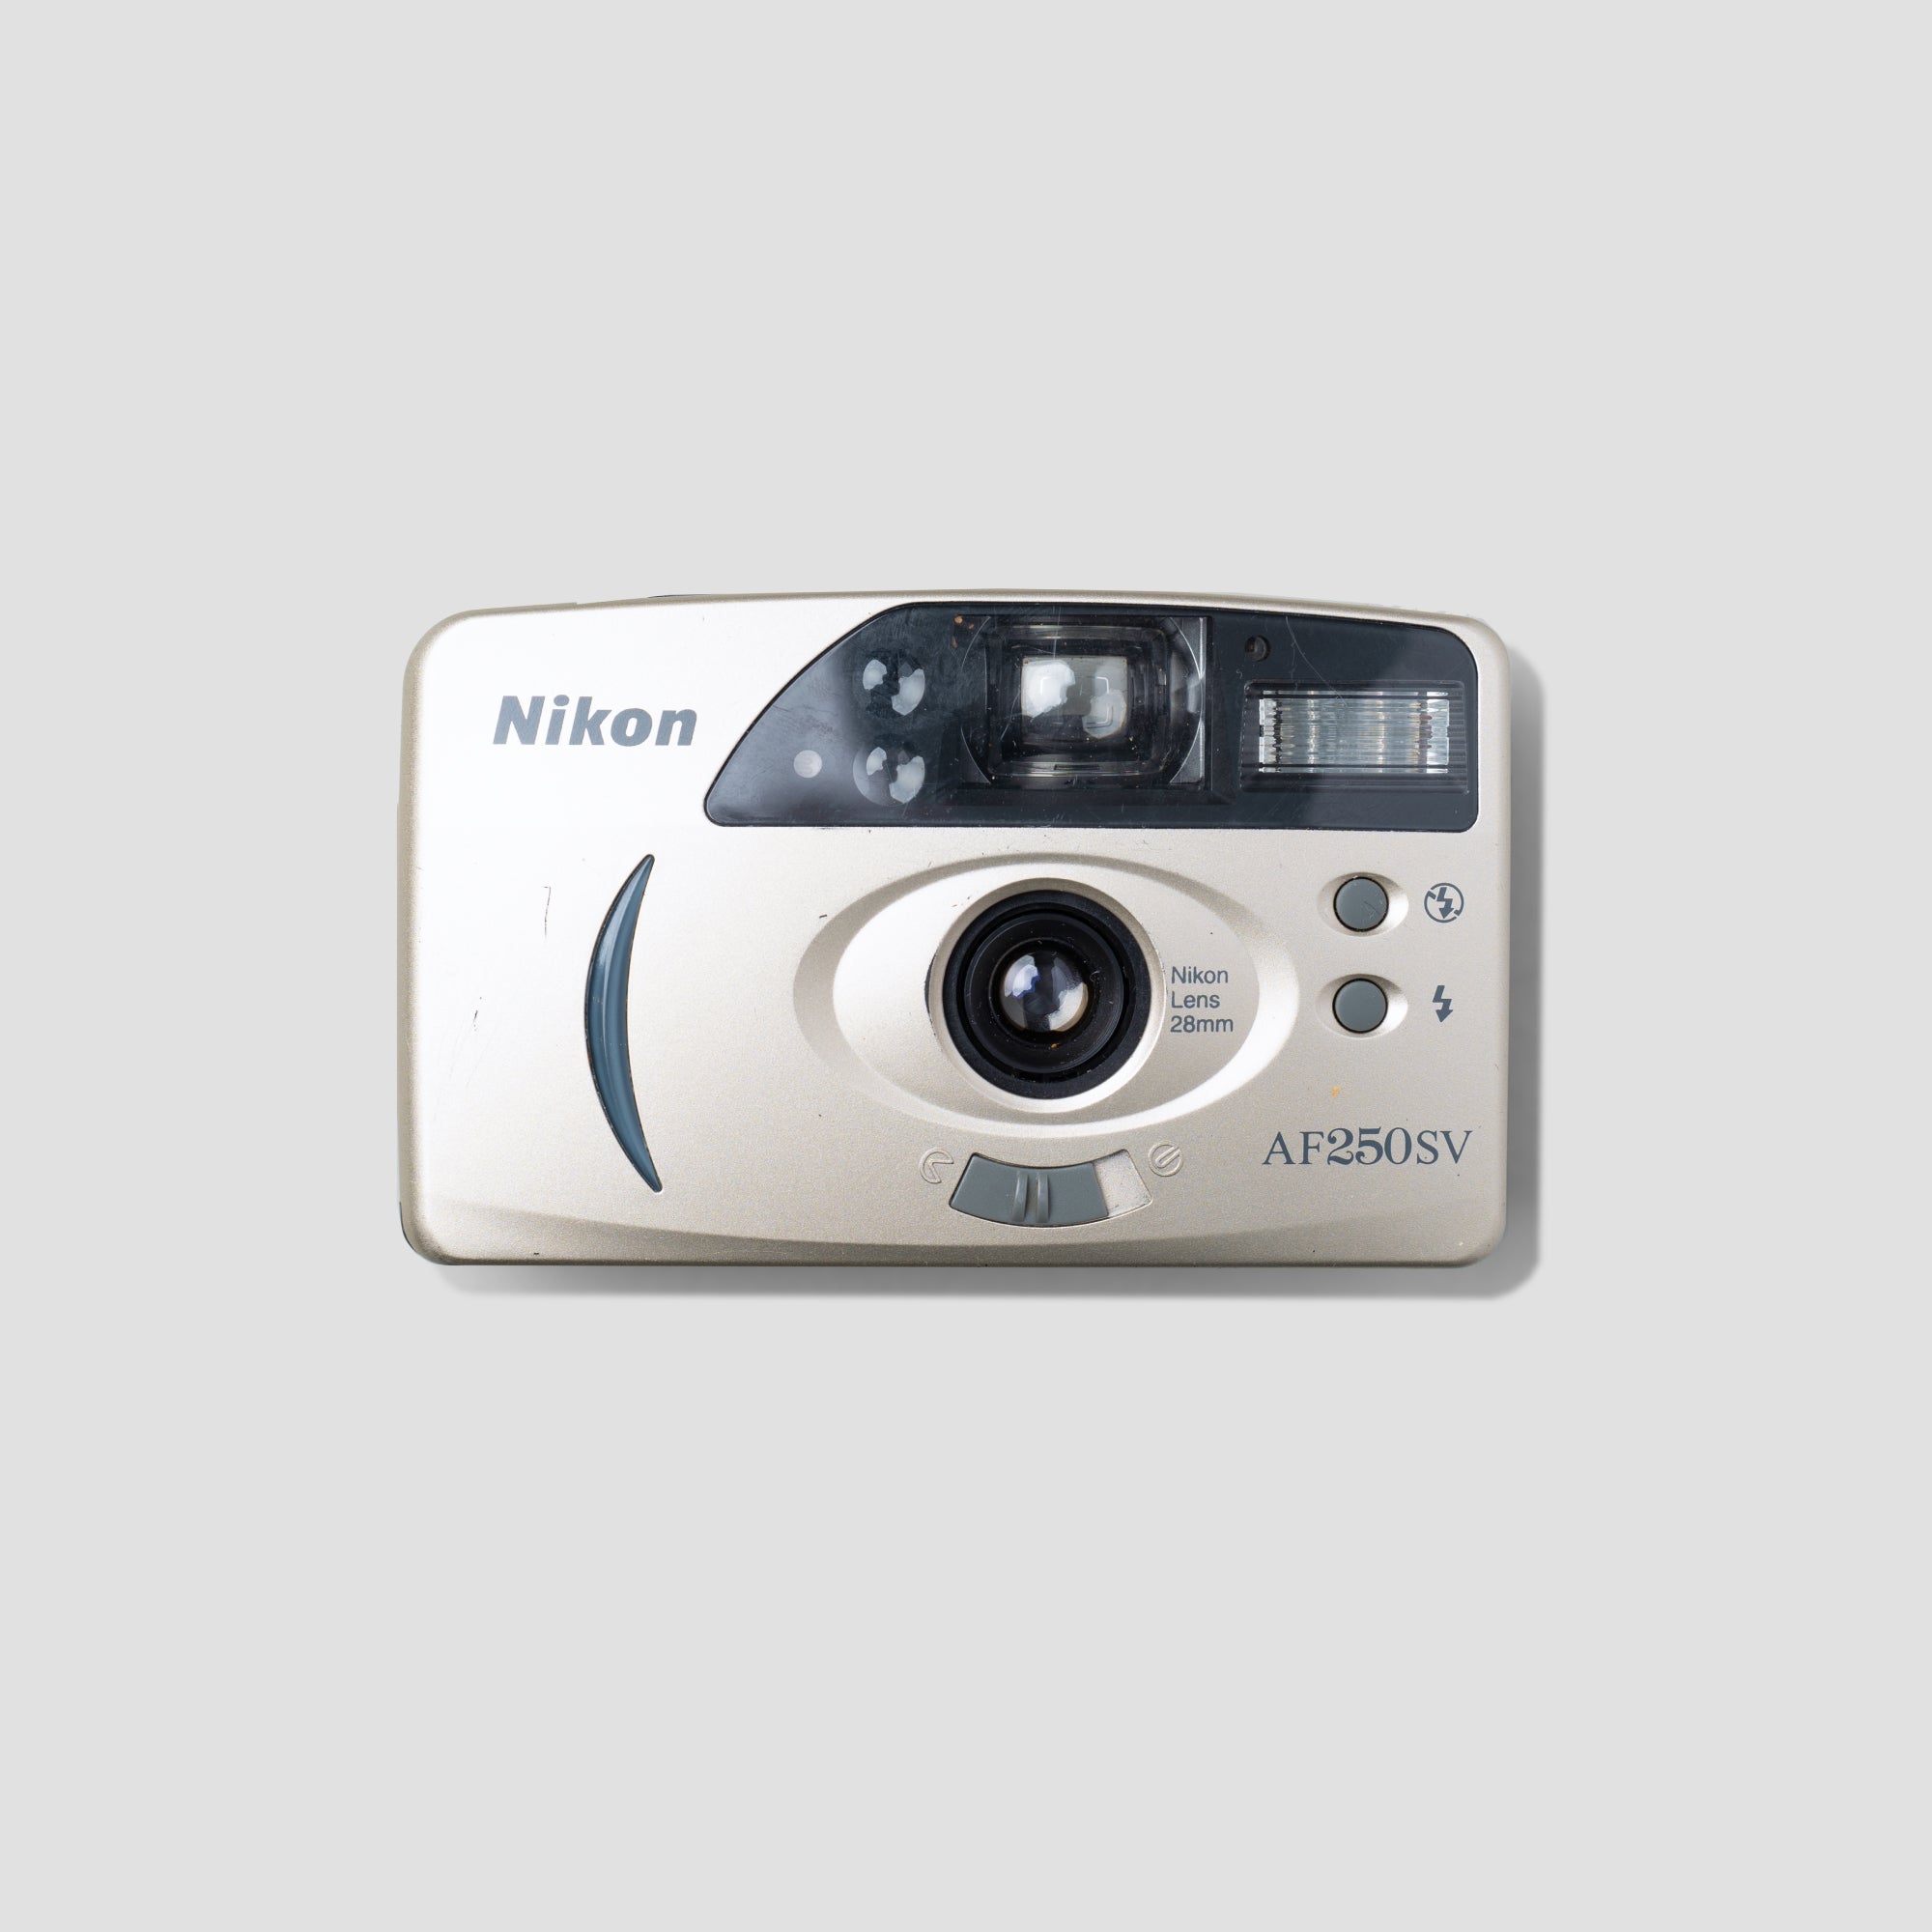 Buy Nikon AF250 SV now at Analogue Amsterdam